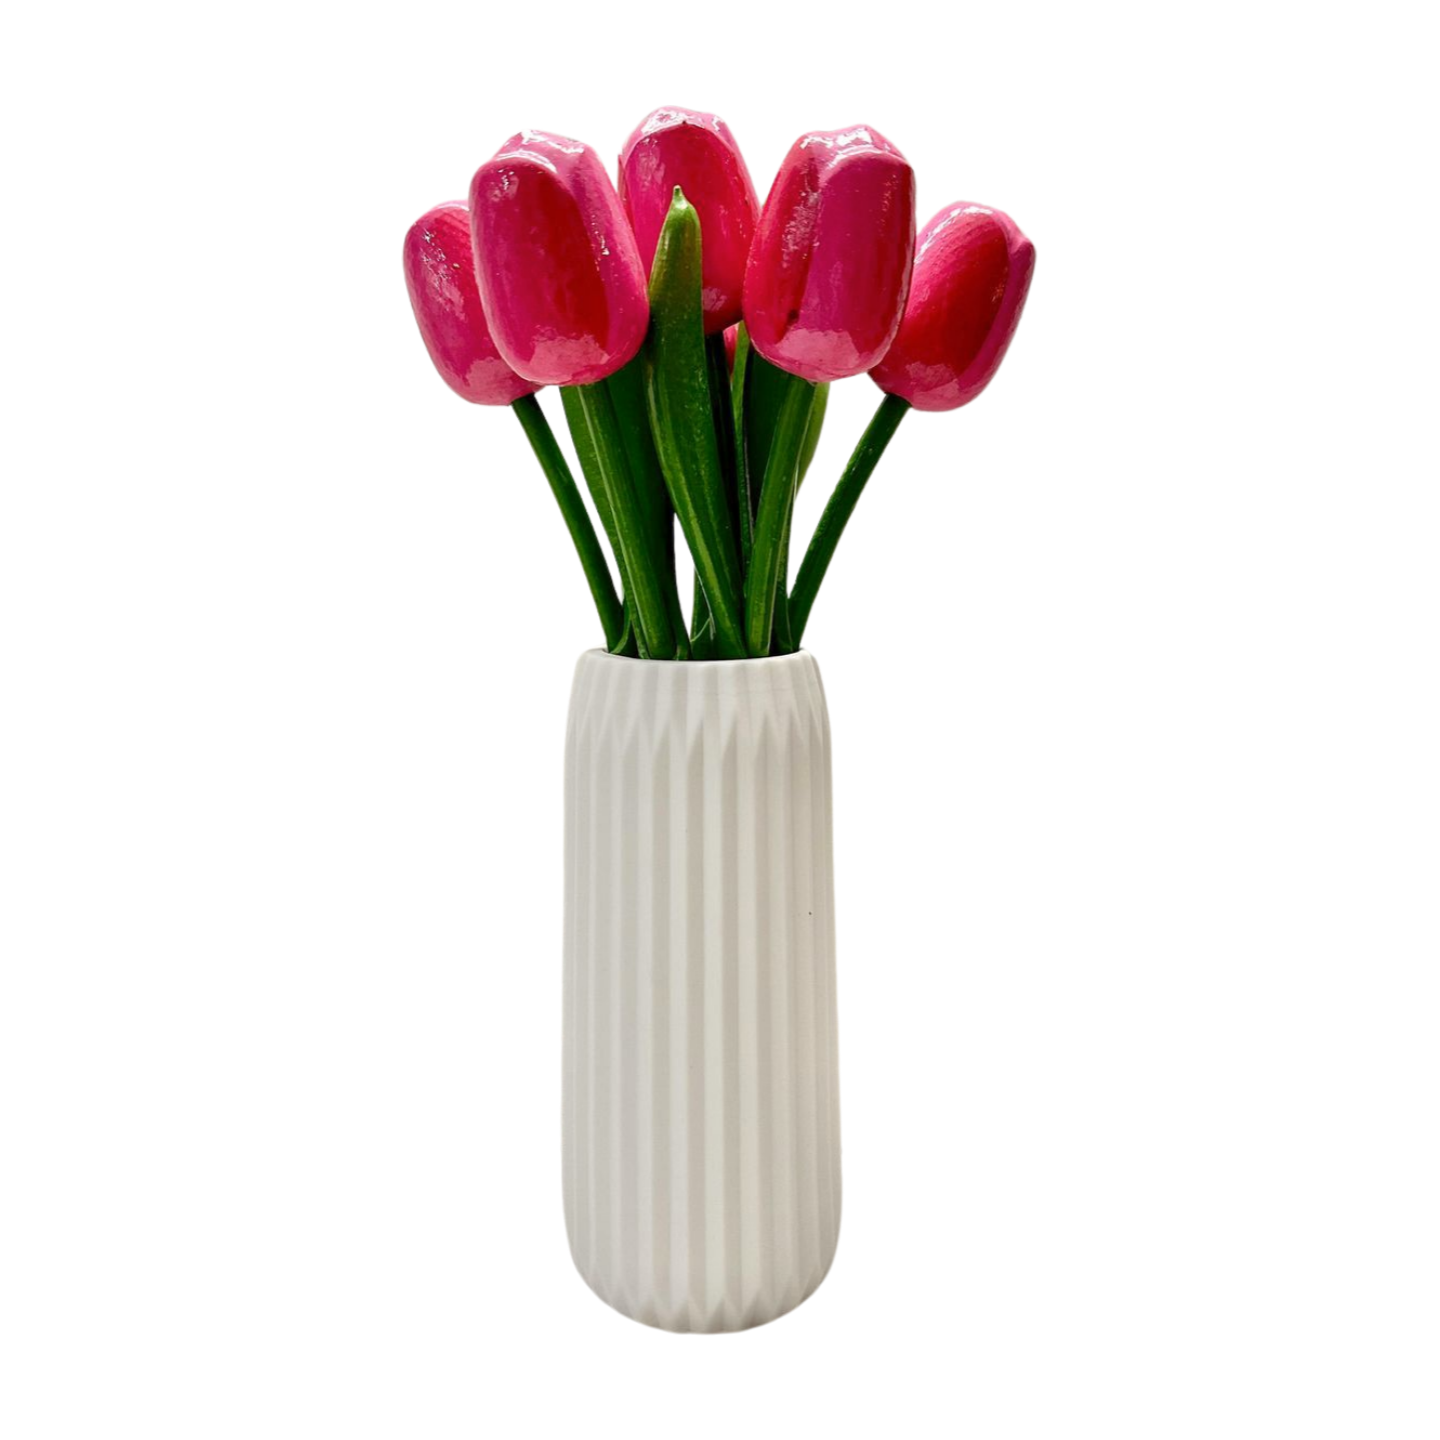 Wooden Dutch Tulips in Pink